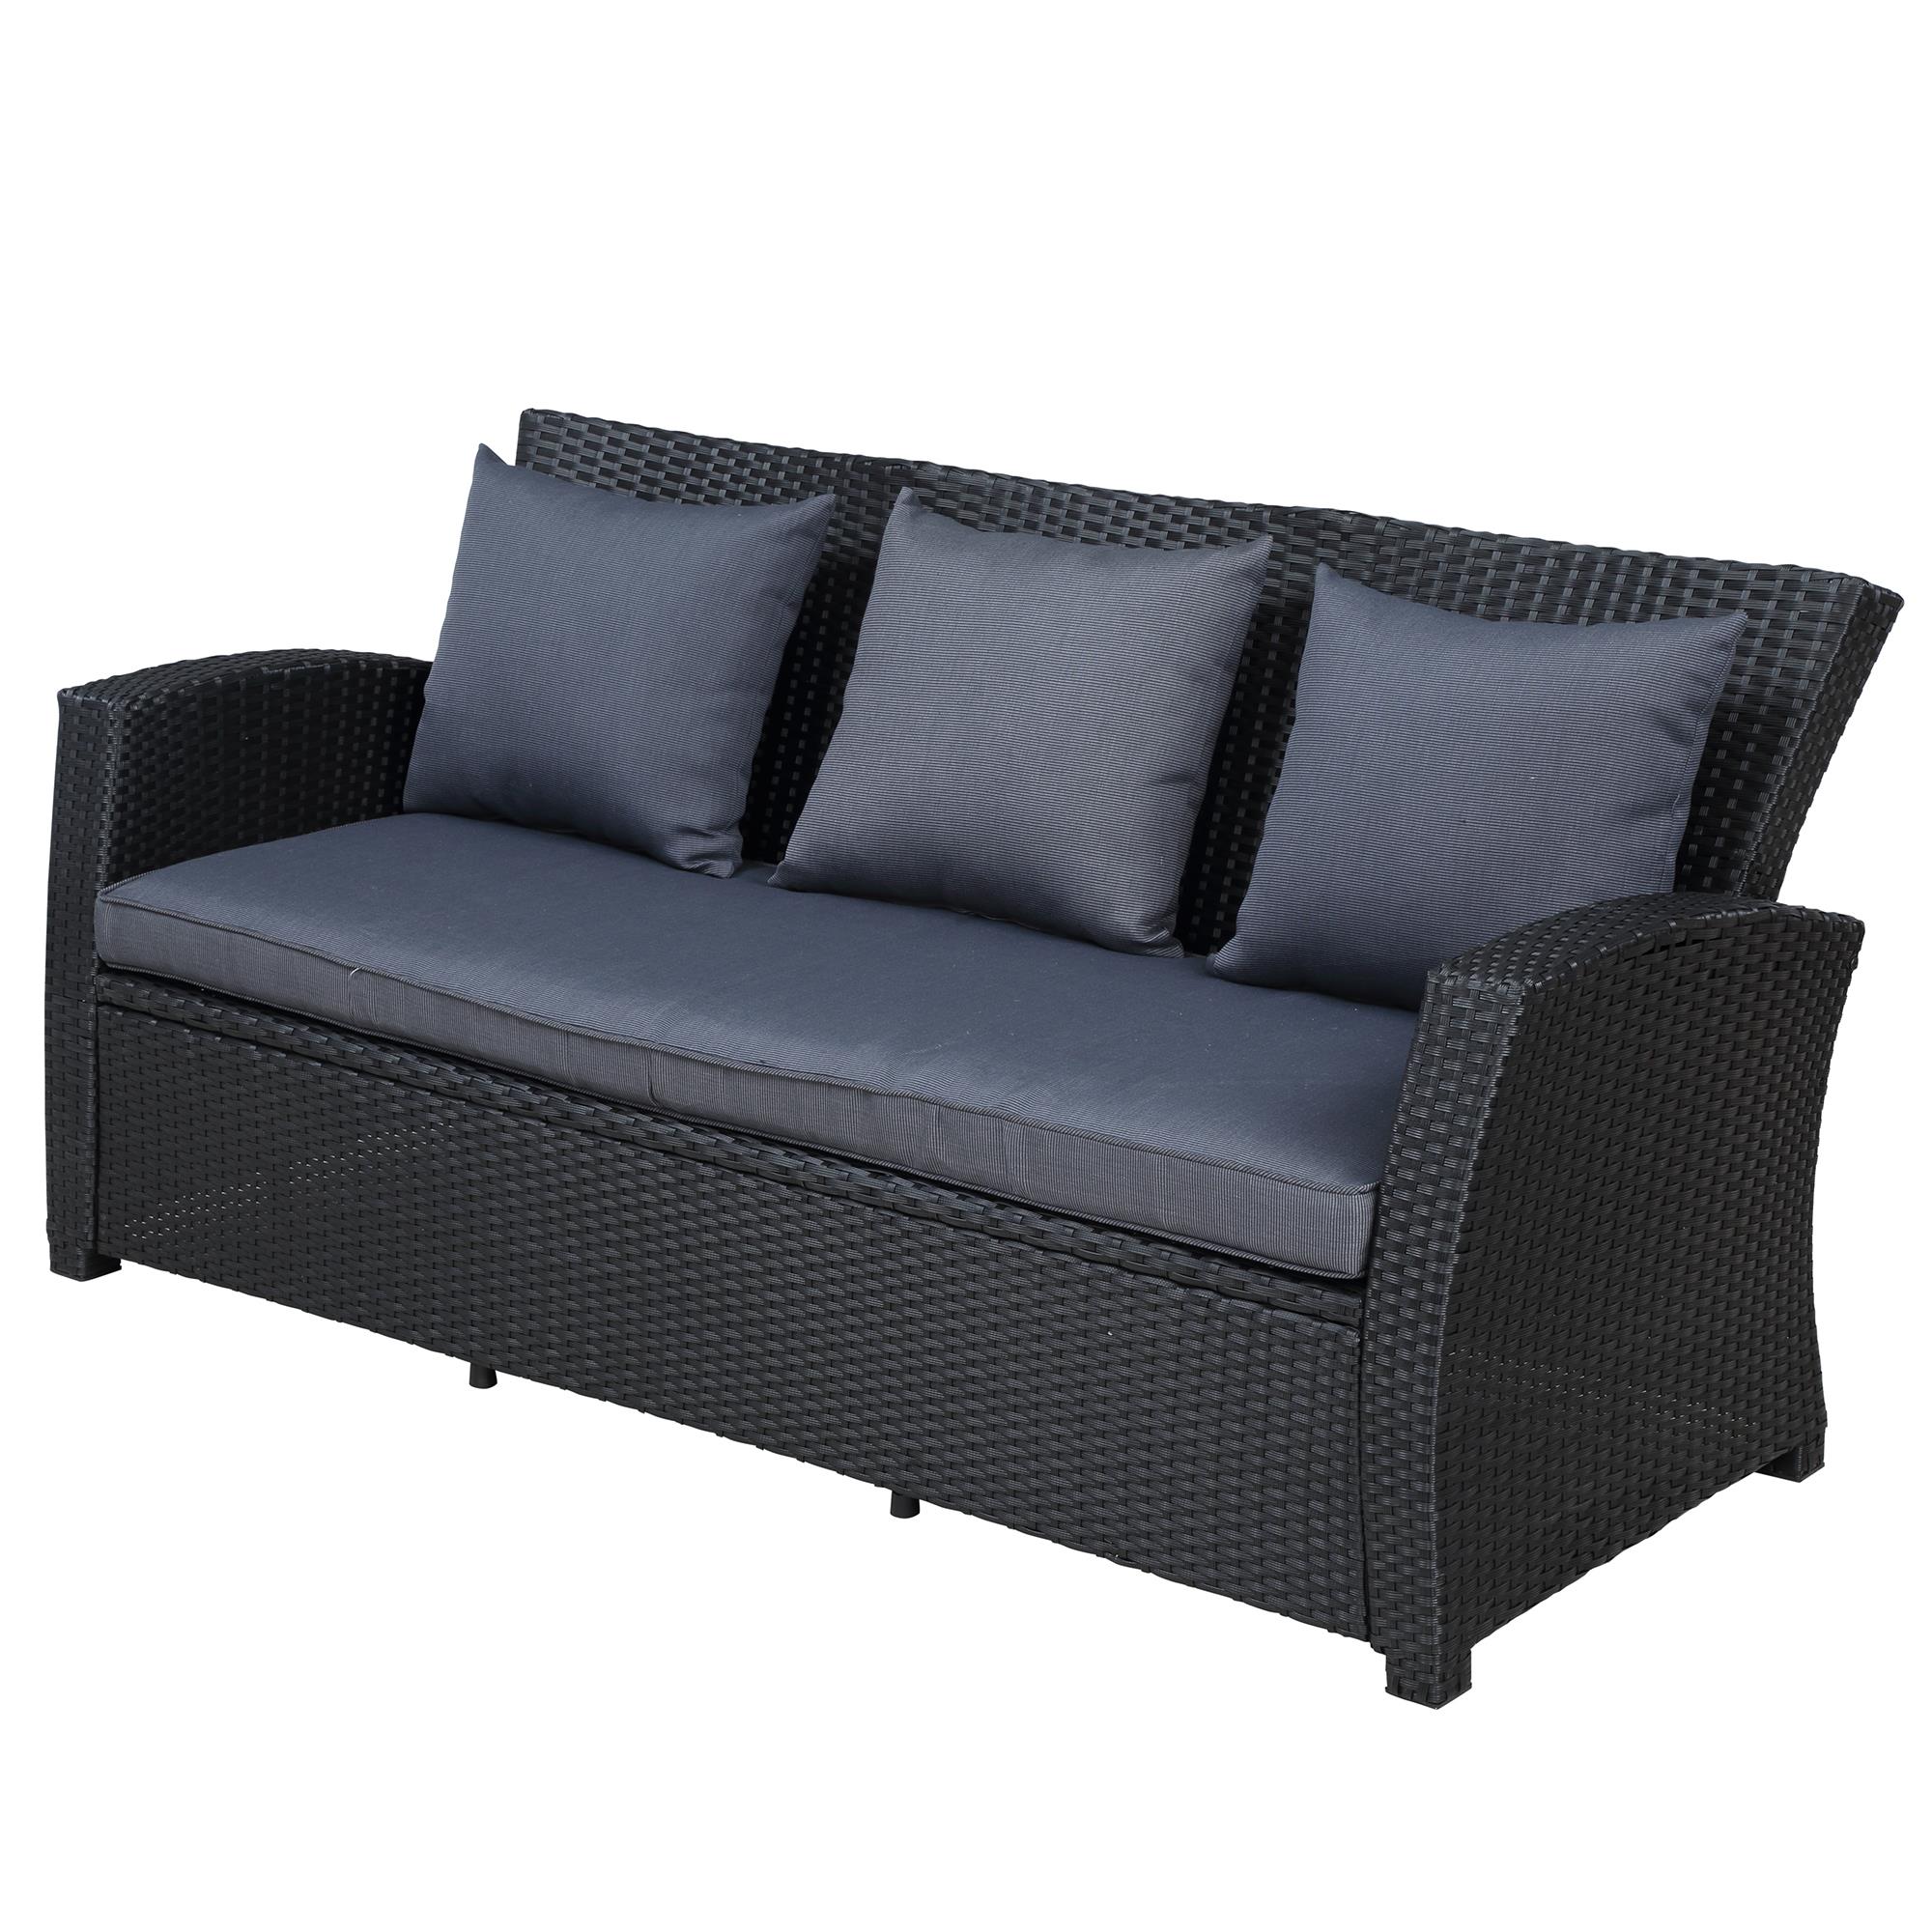 Baytocare Outdoor Patio Furniture Set 4-Piece Conversation Set Black Wicker Furniture Sofa Set with Dark Grey Cushions - image 4 of 5